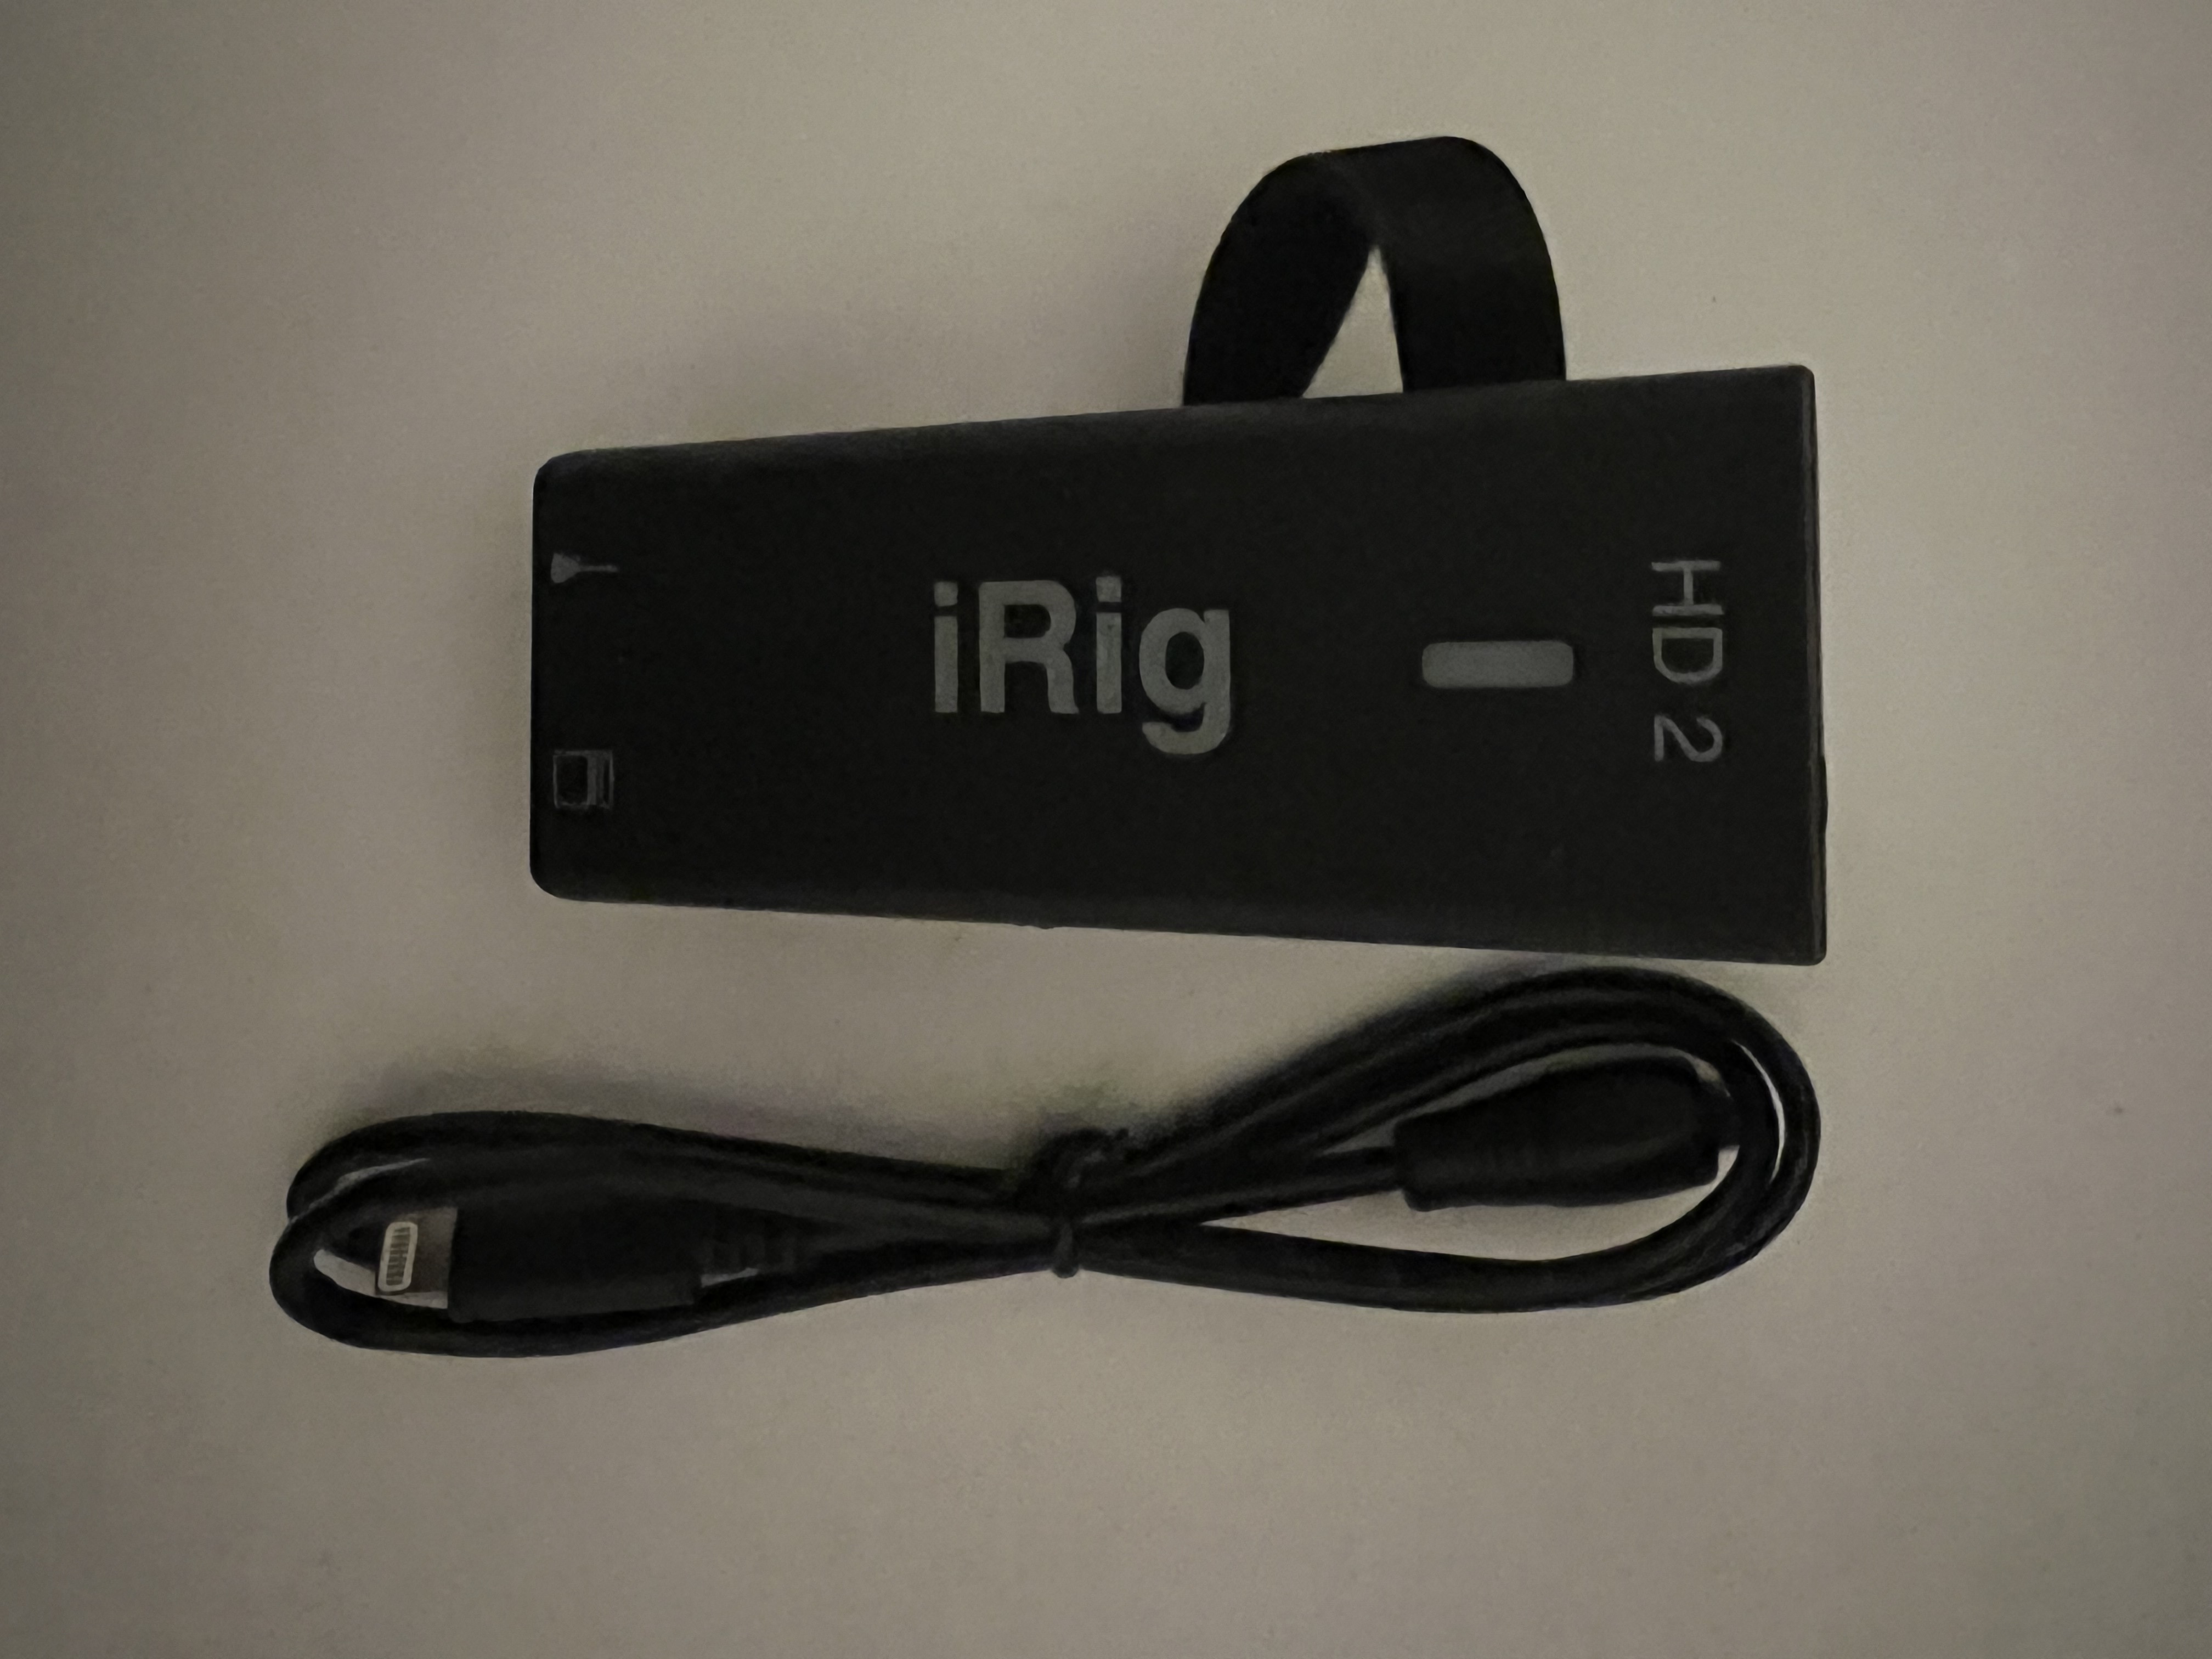 iRig HD 2 - IK Multimedia iRig HD 2 - Audiofanzine